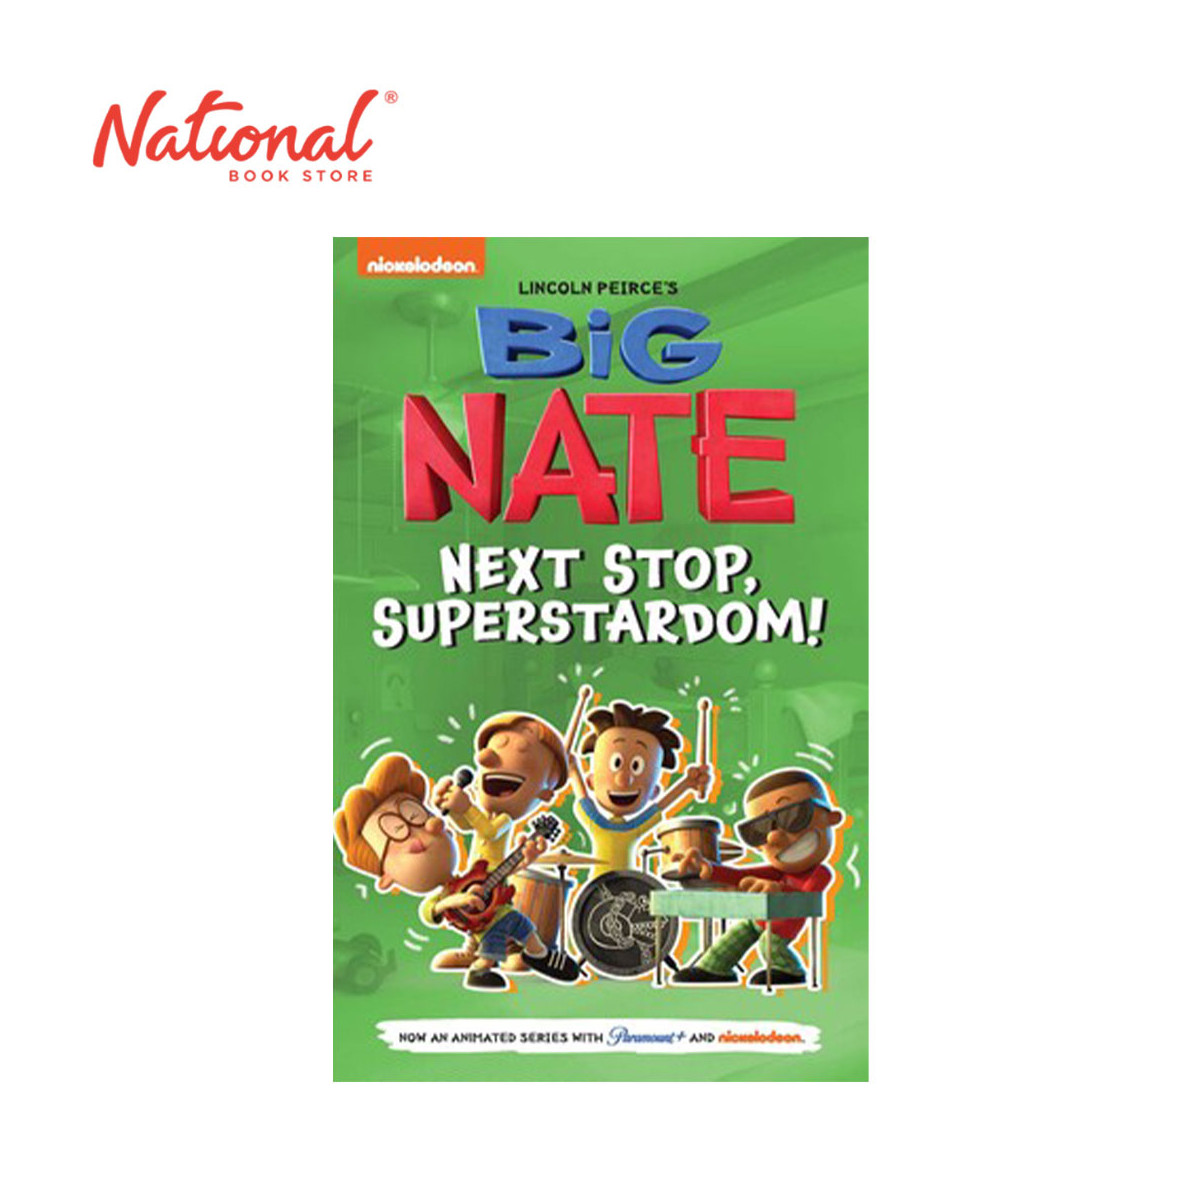 Big Nate: Next Stop, Superstardom! V3 By Lincoln Peirce - Trade Paperback - Books for Kids